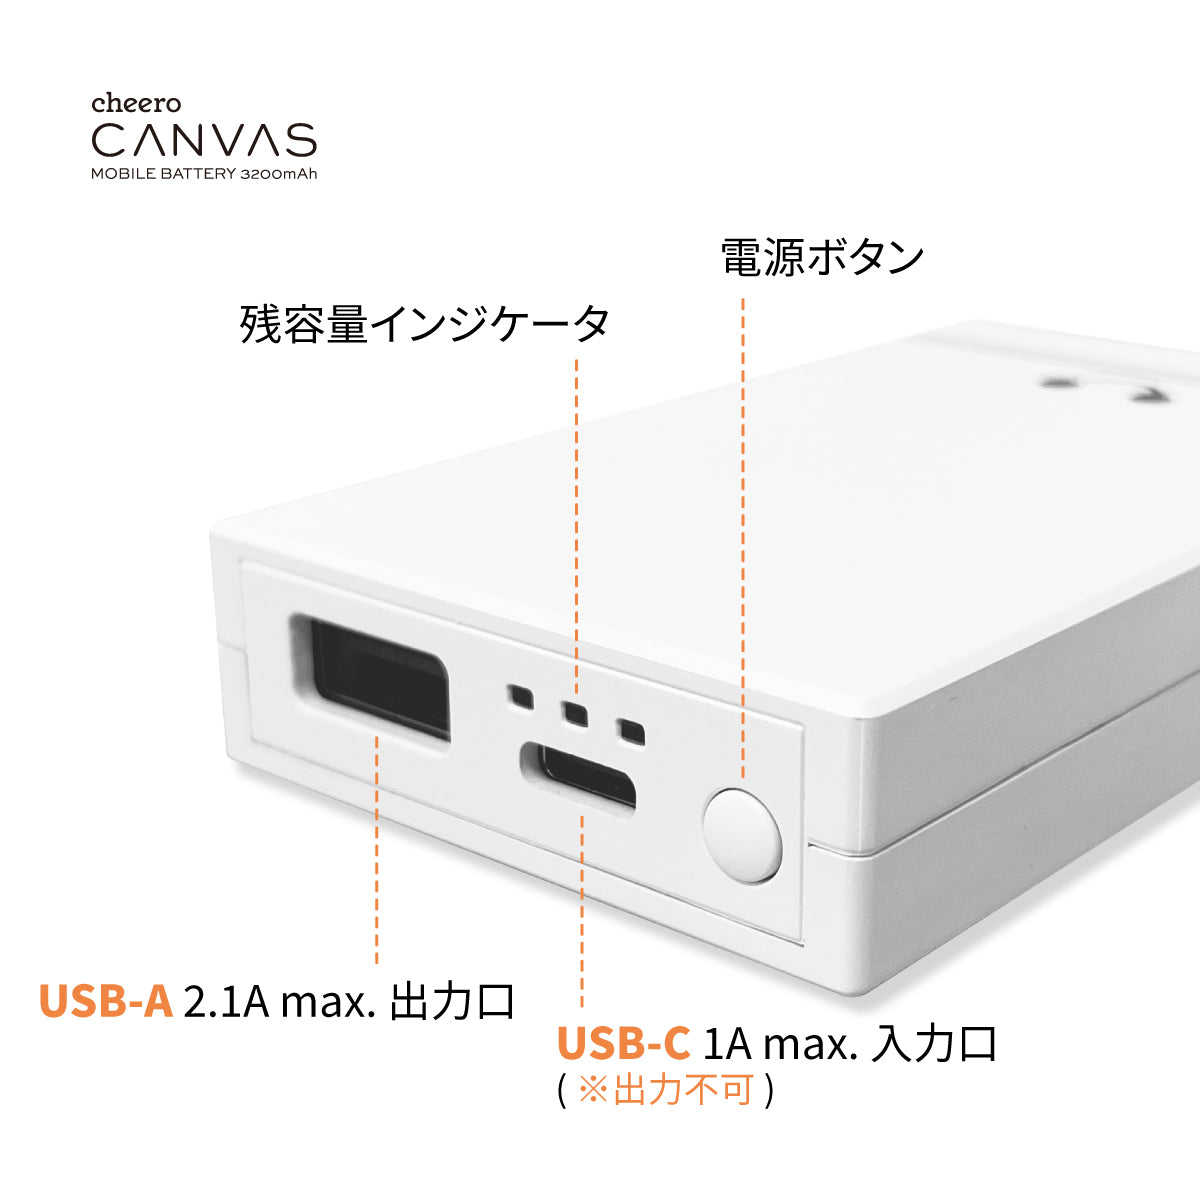 cheero Canvas 3200mAh IoT機器対応【USB-C Ver.】